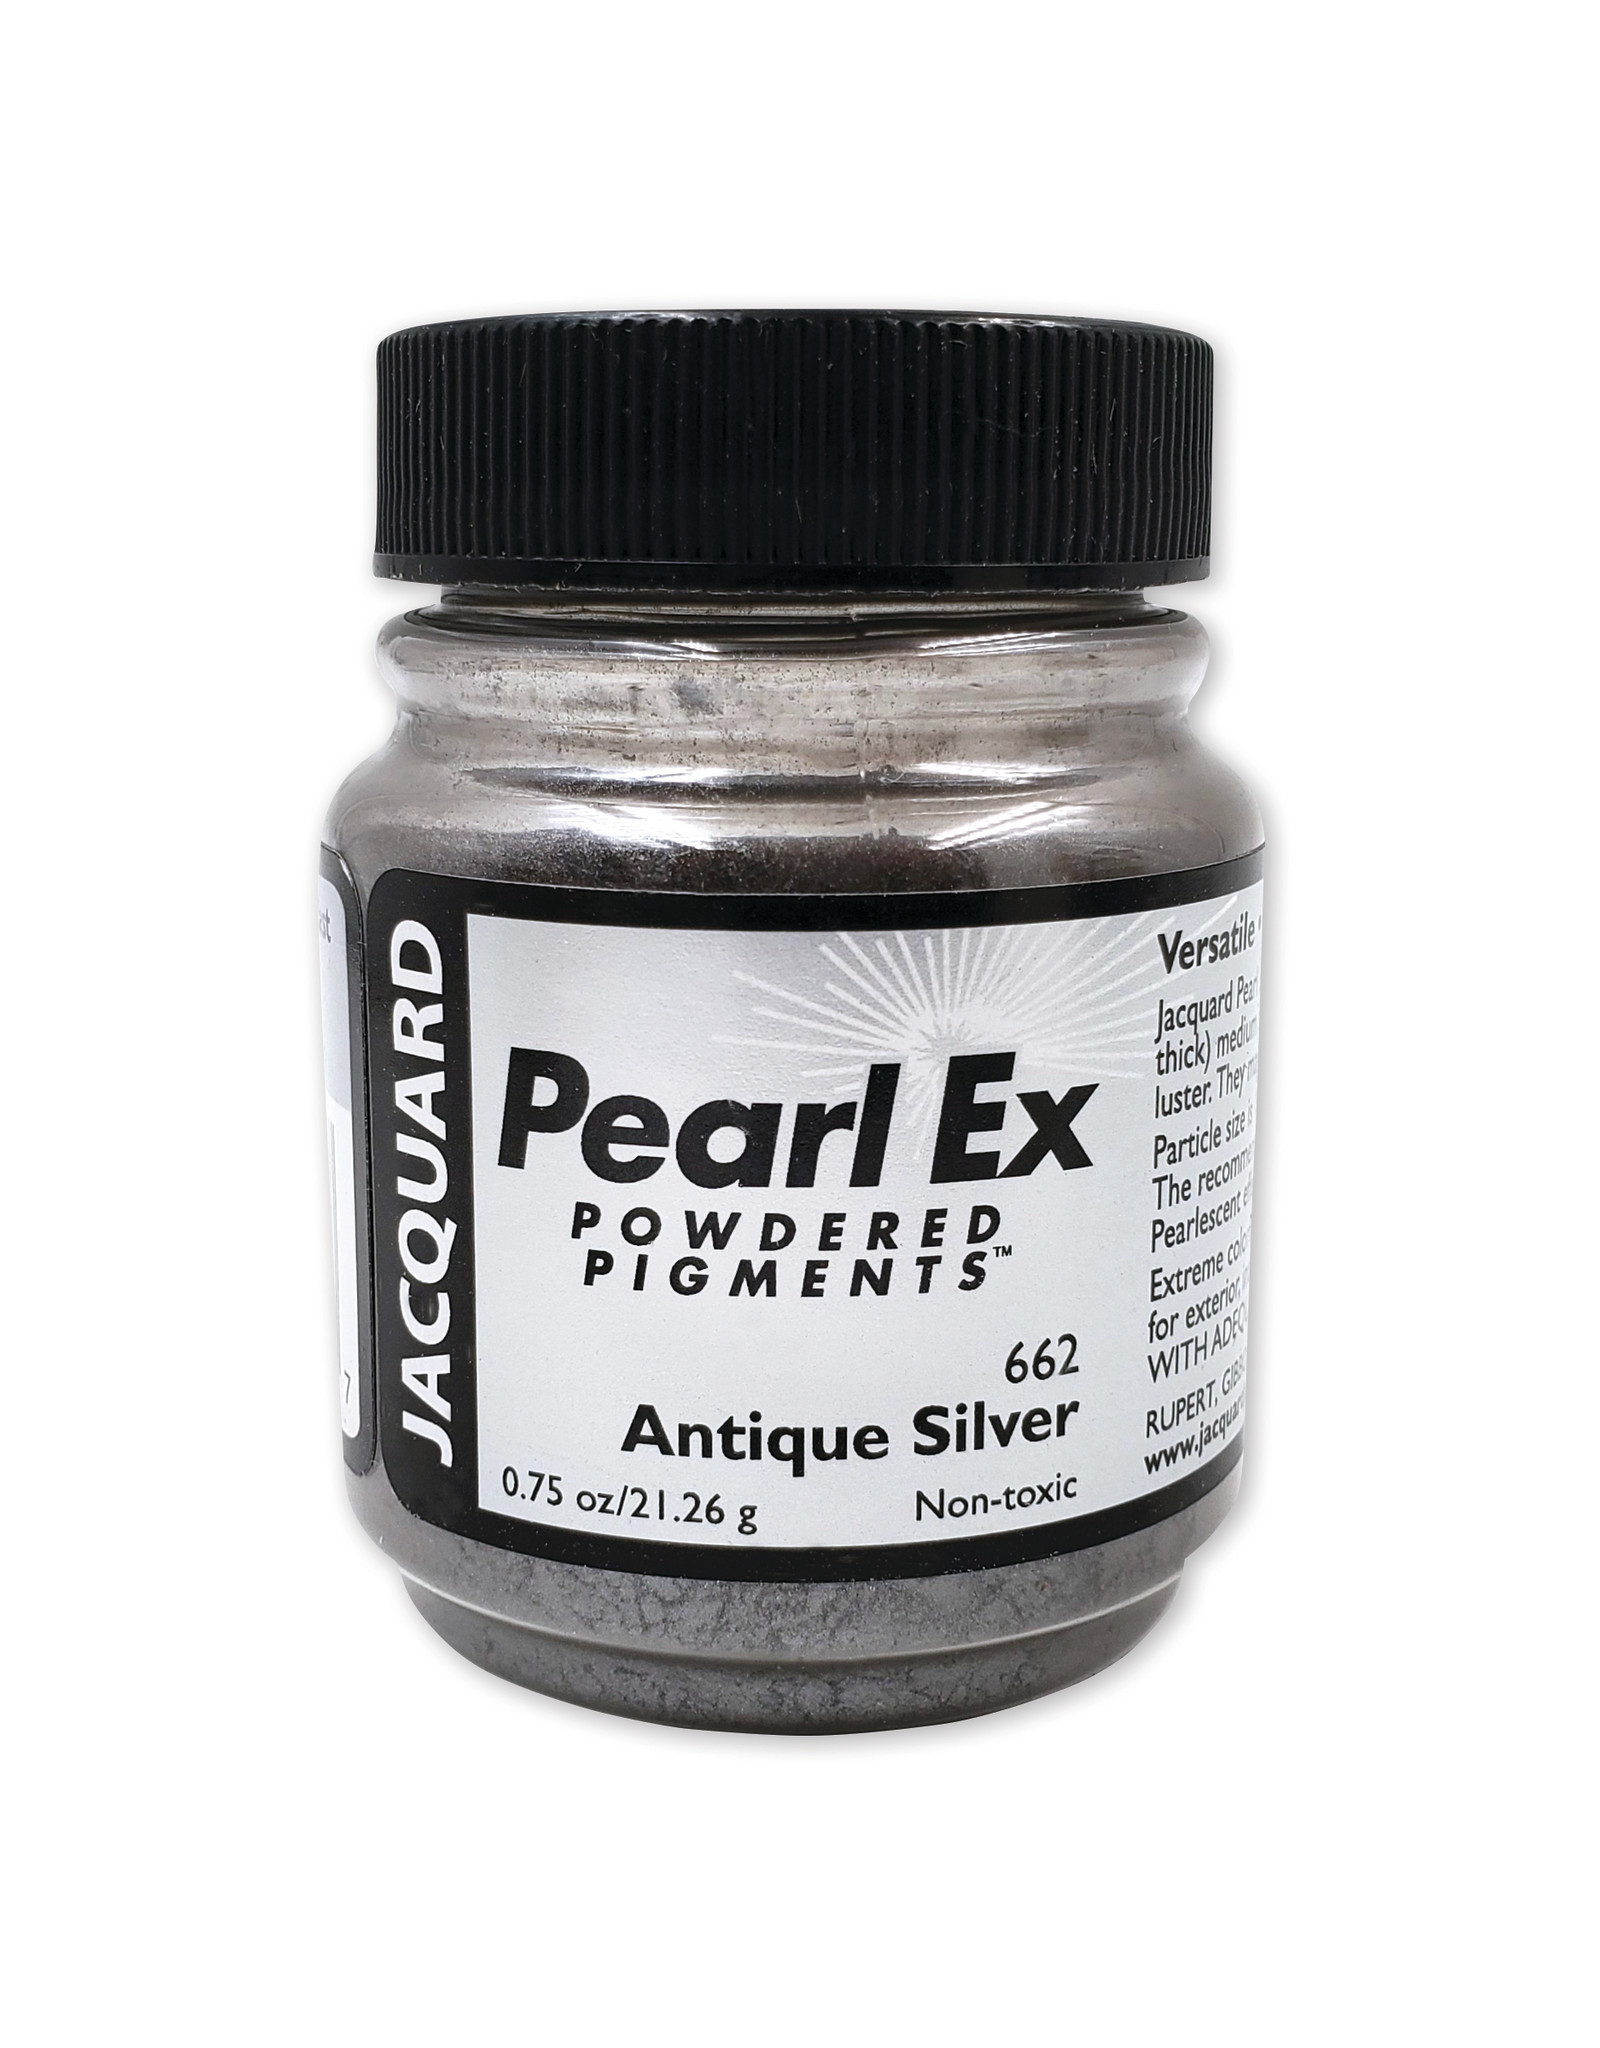 Jacquard Jacquard Pearl Ex, Antique Silver #662 3/4oz